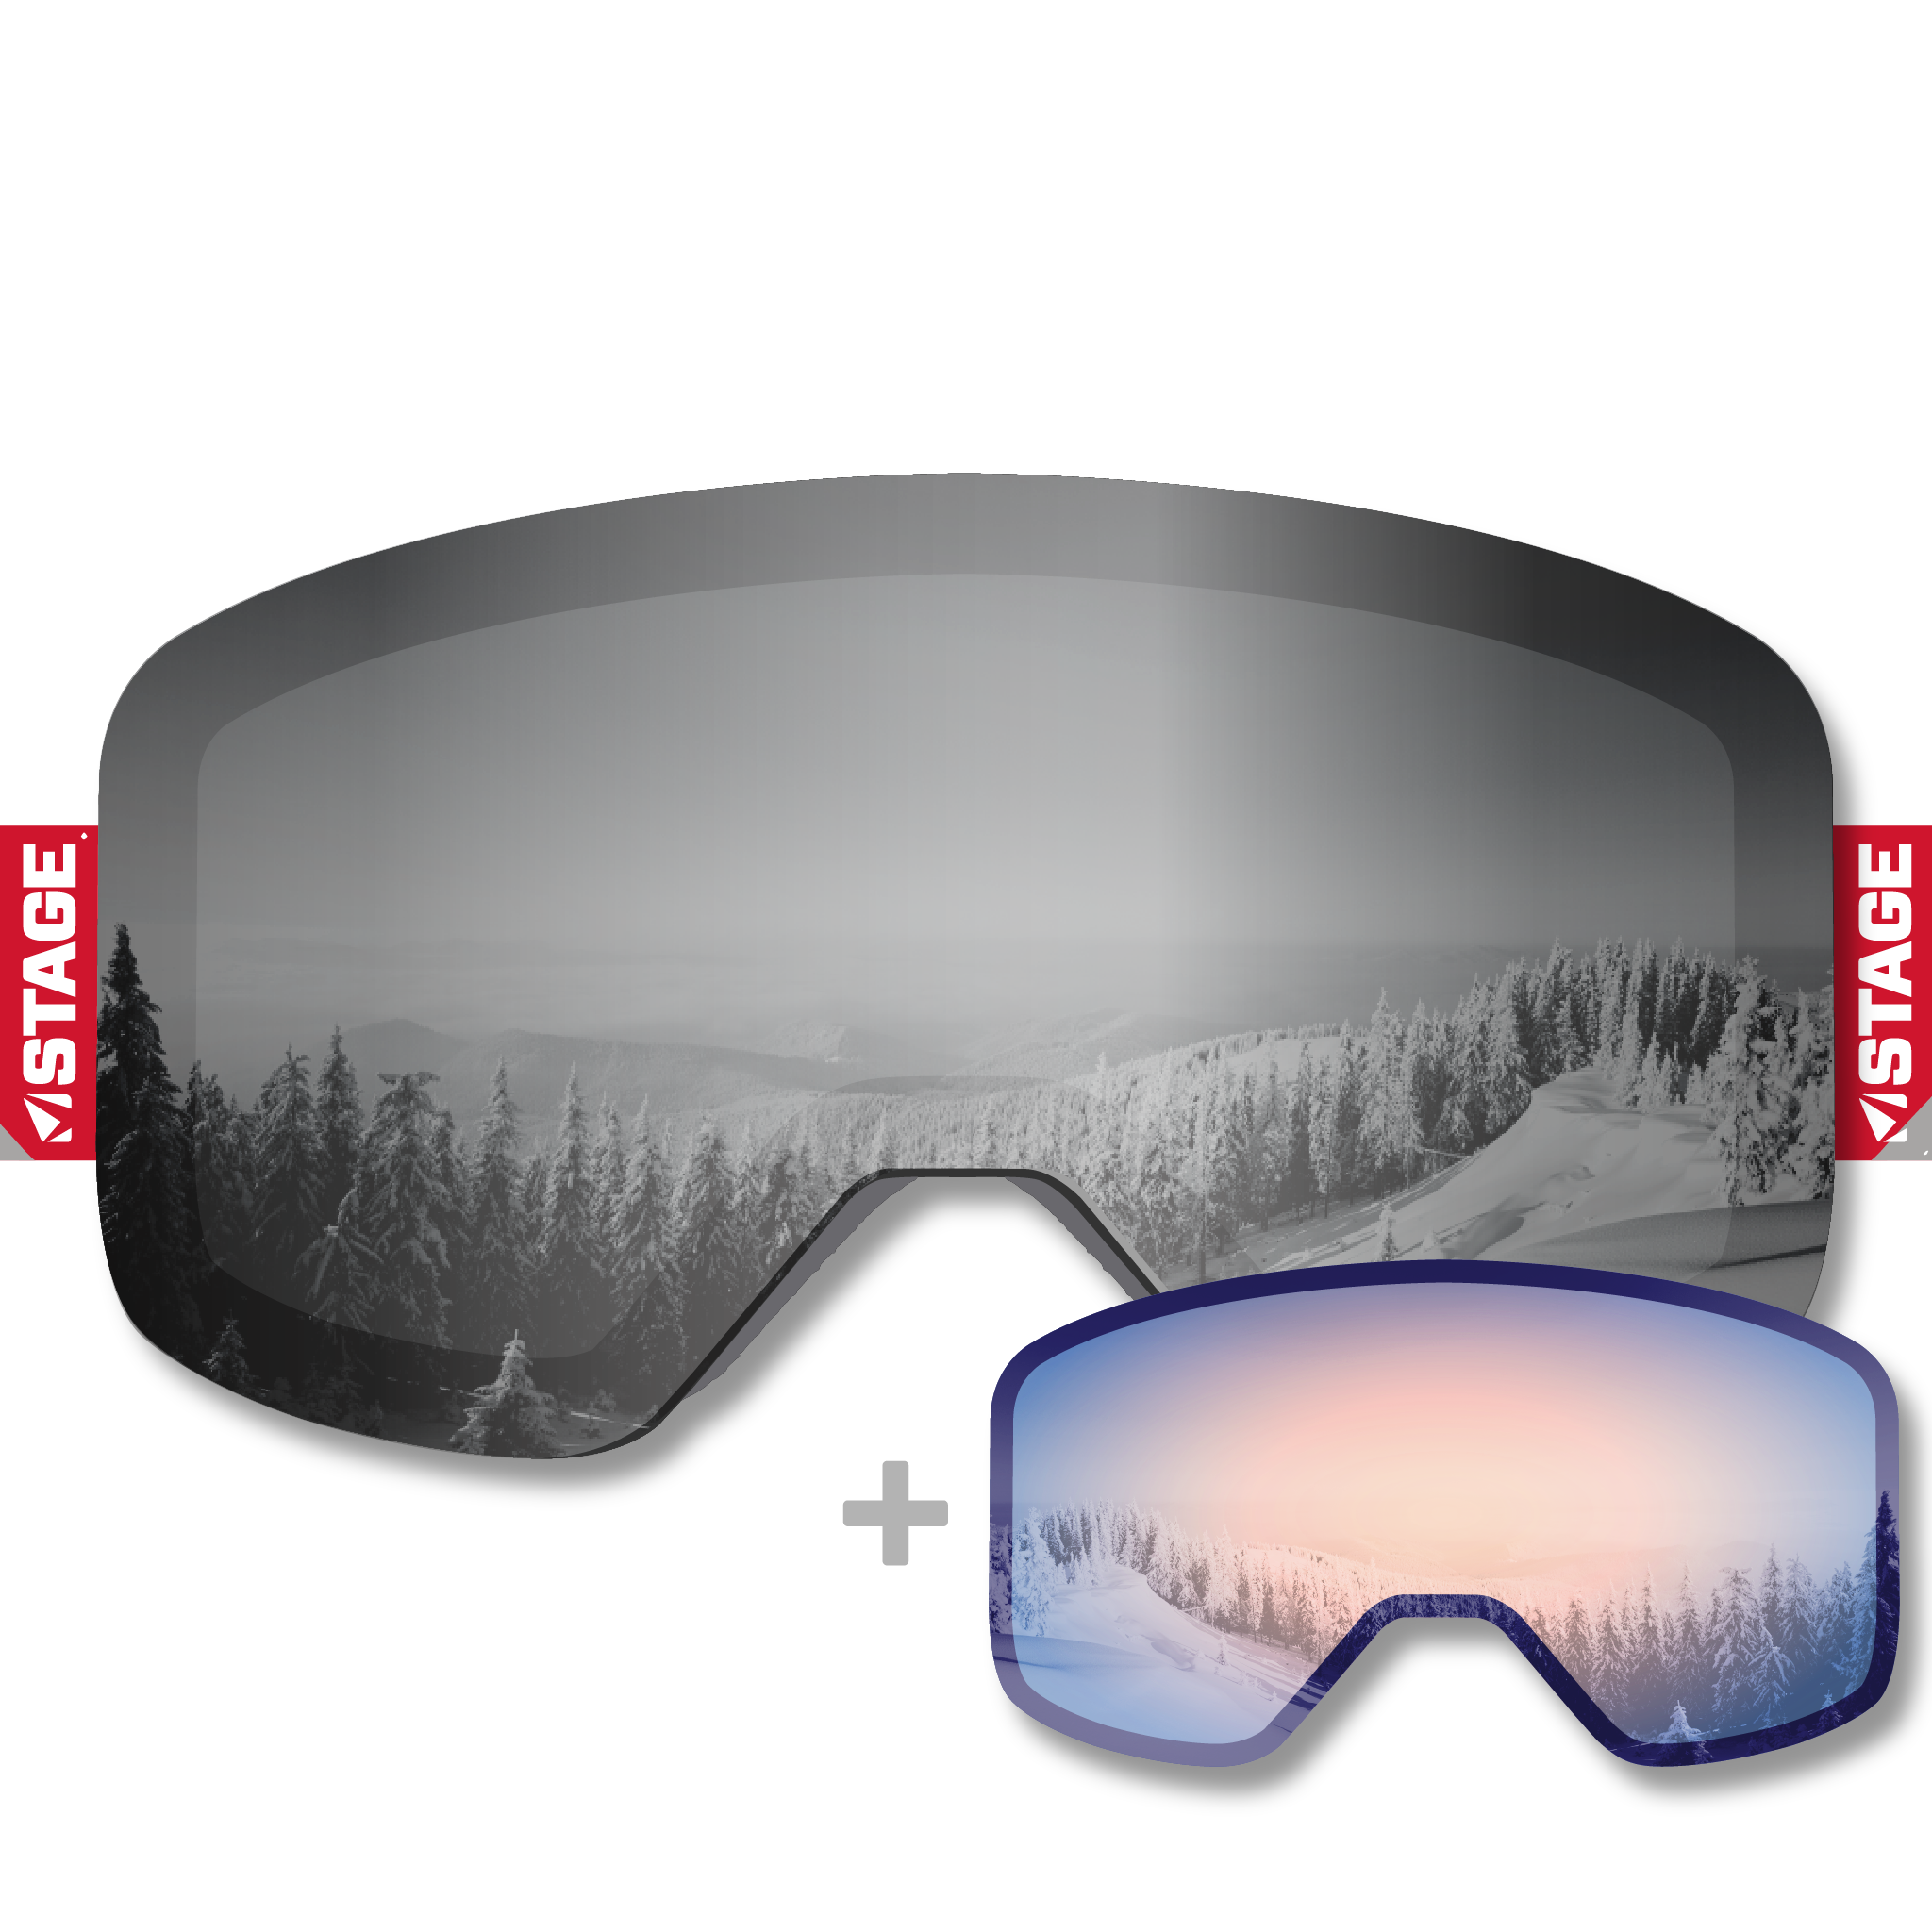 NSCD Propnetic - Magnetic Ski Goggle + Bonus Lens